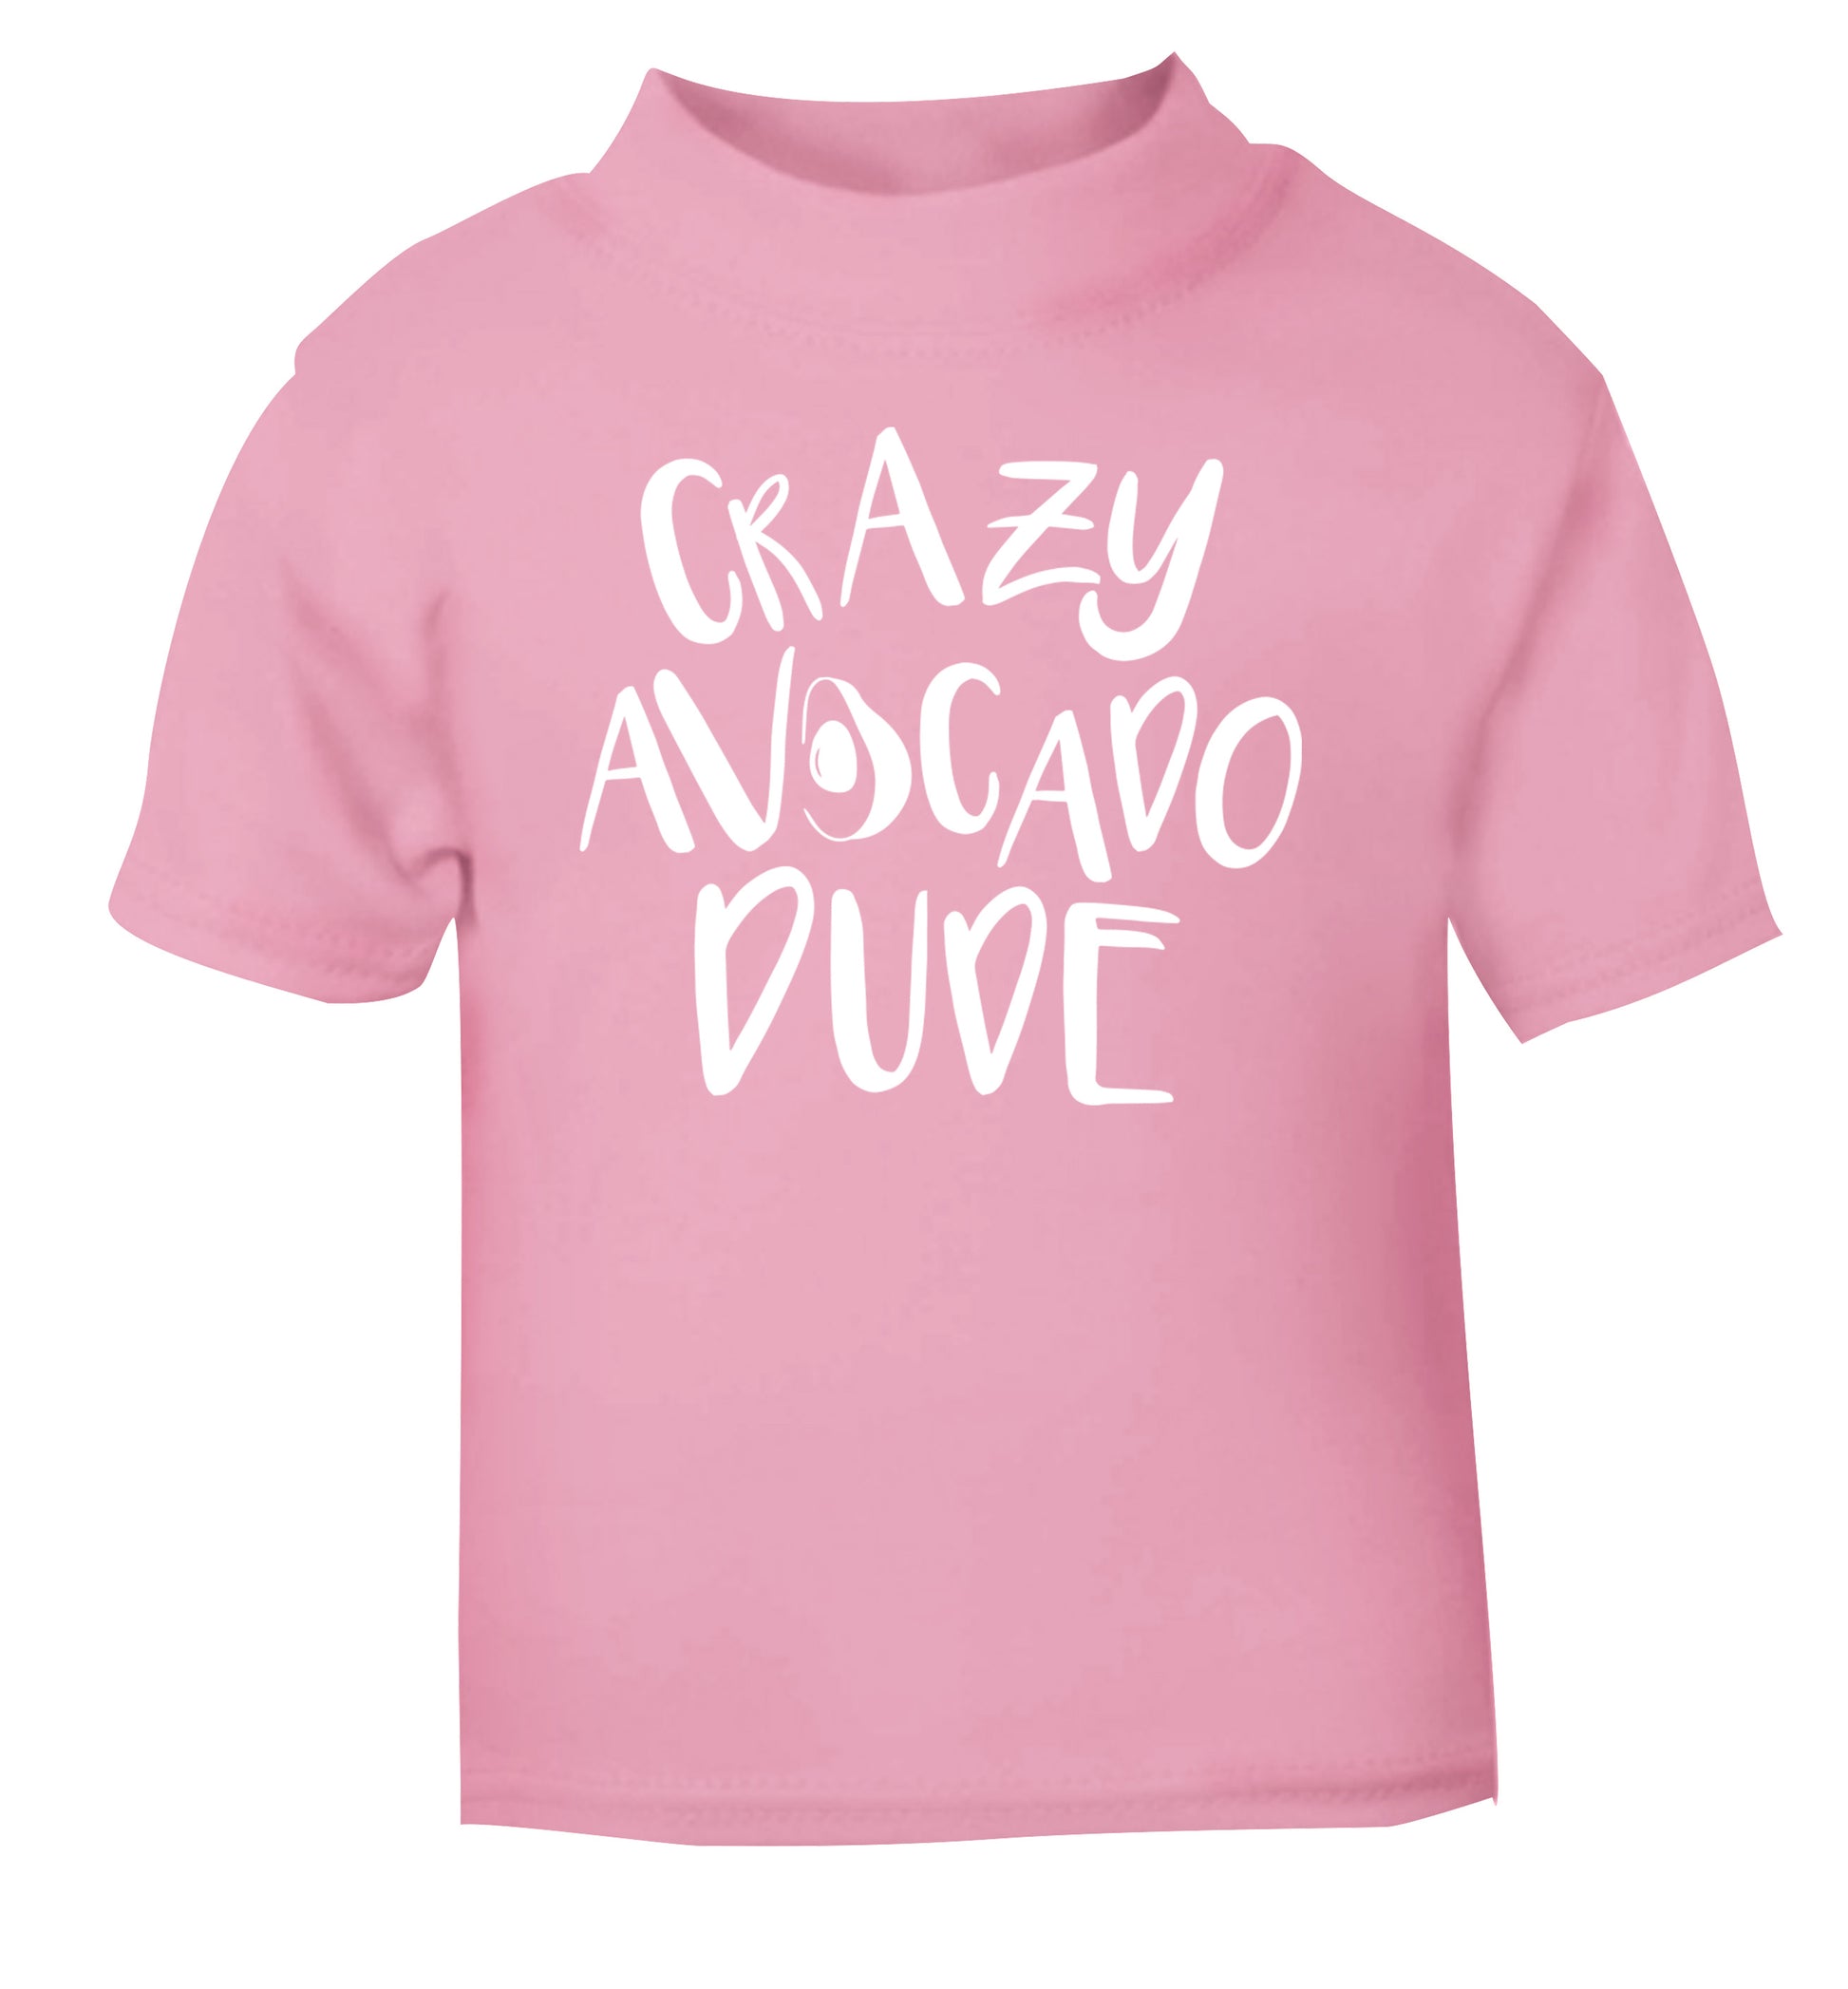 Crazy avocado dude light pink Baby Toddler Tshirt 2 Years